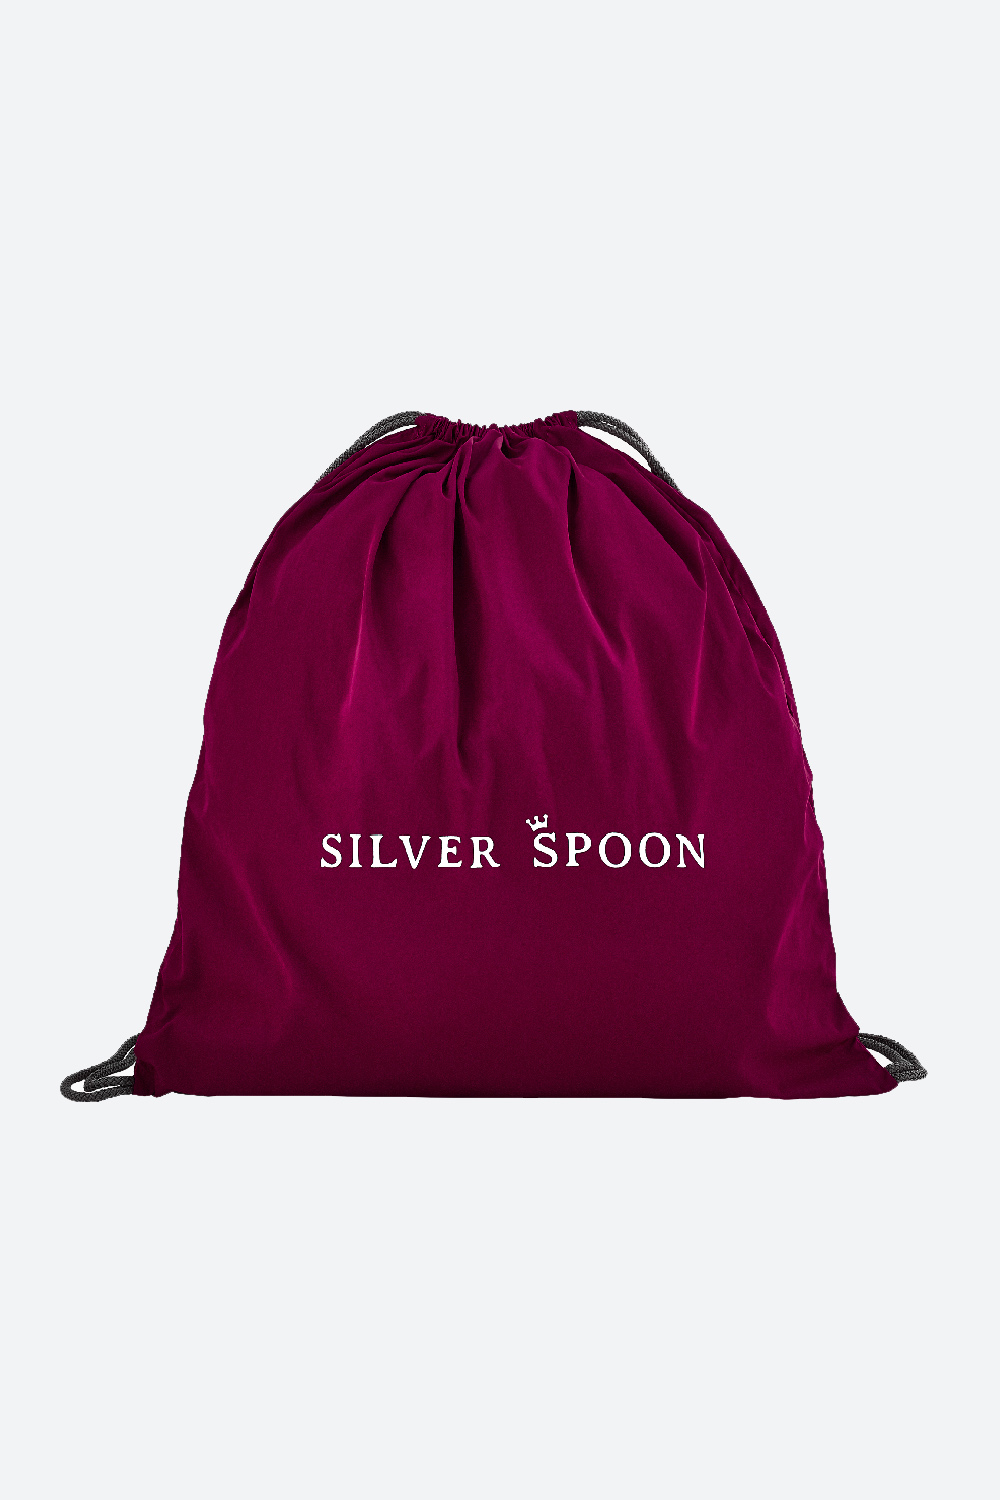 Мешок-рюкзак (SAFSU-309-39805-409) Silver spoon